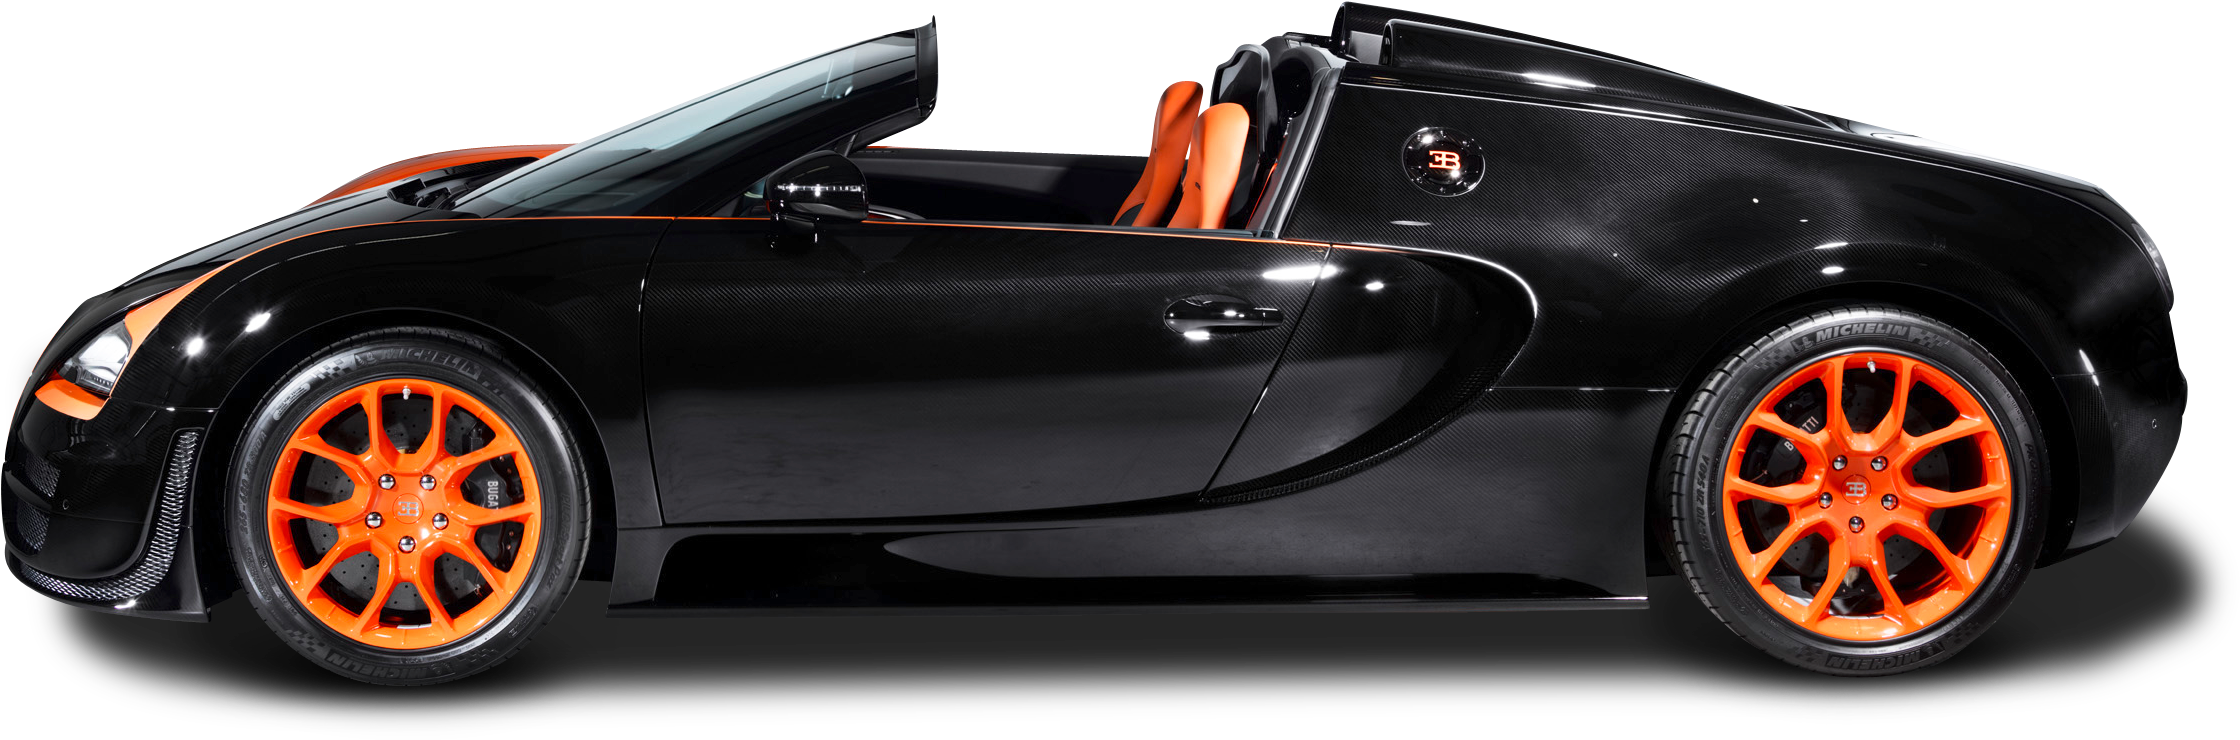 Bugatti Veyron Super Sport PNG Picture